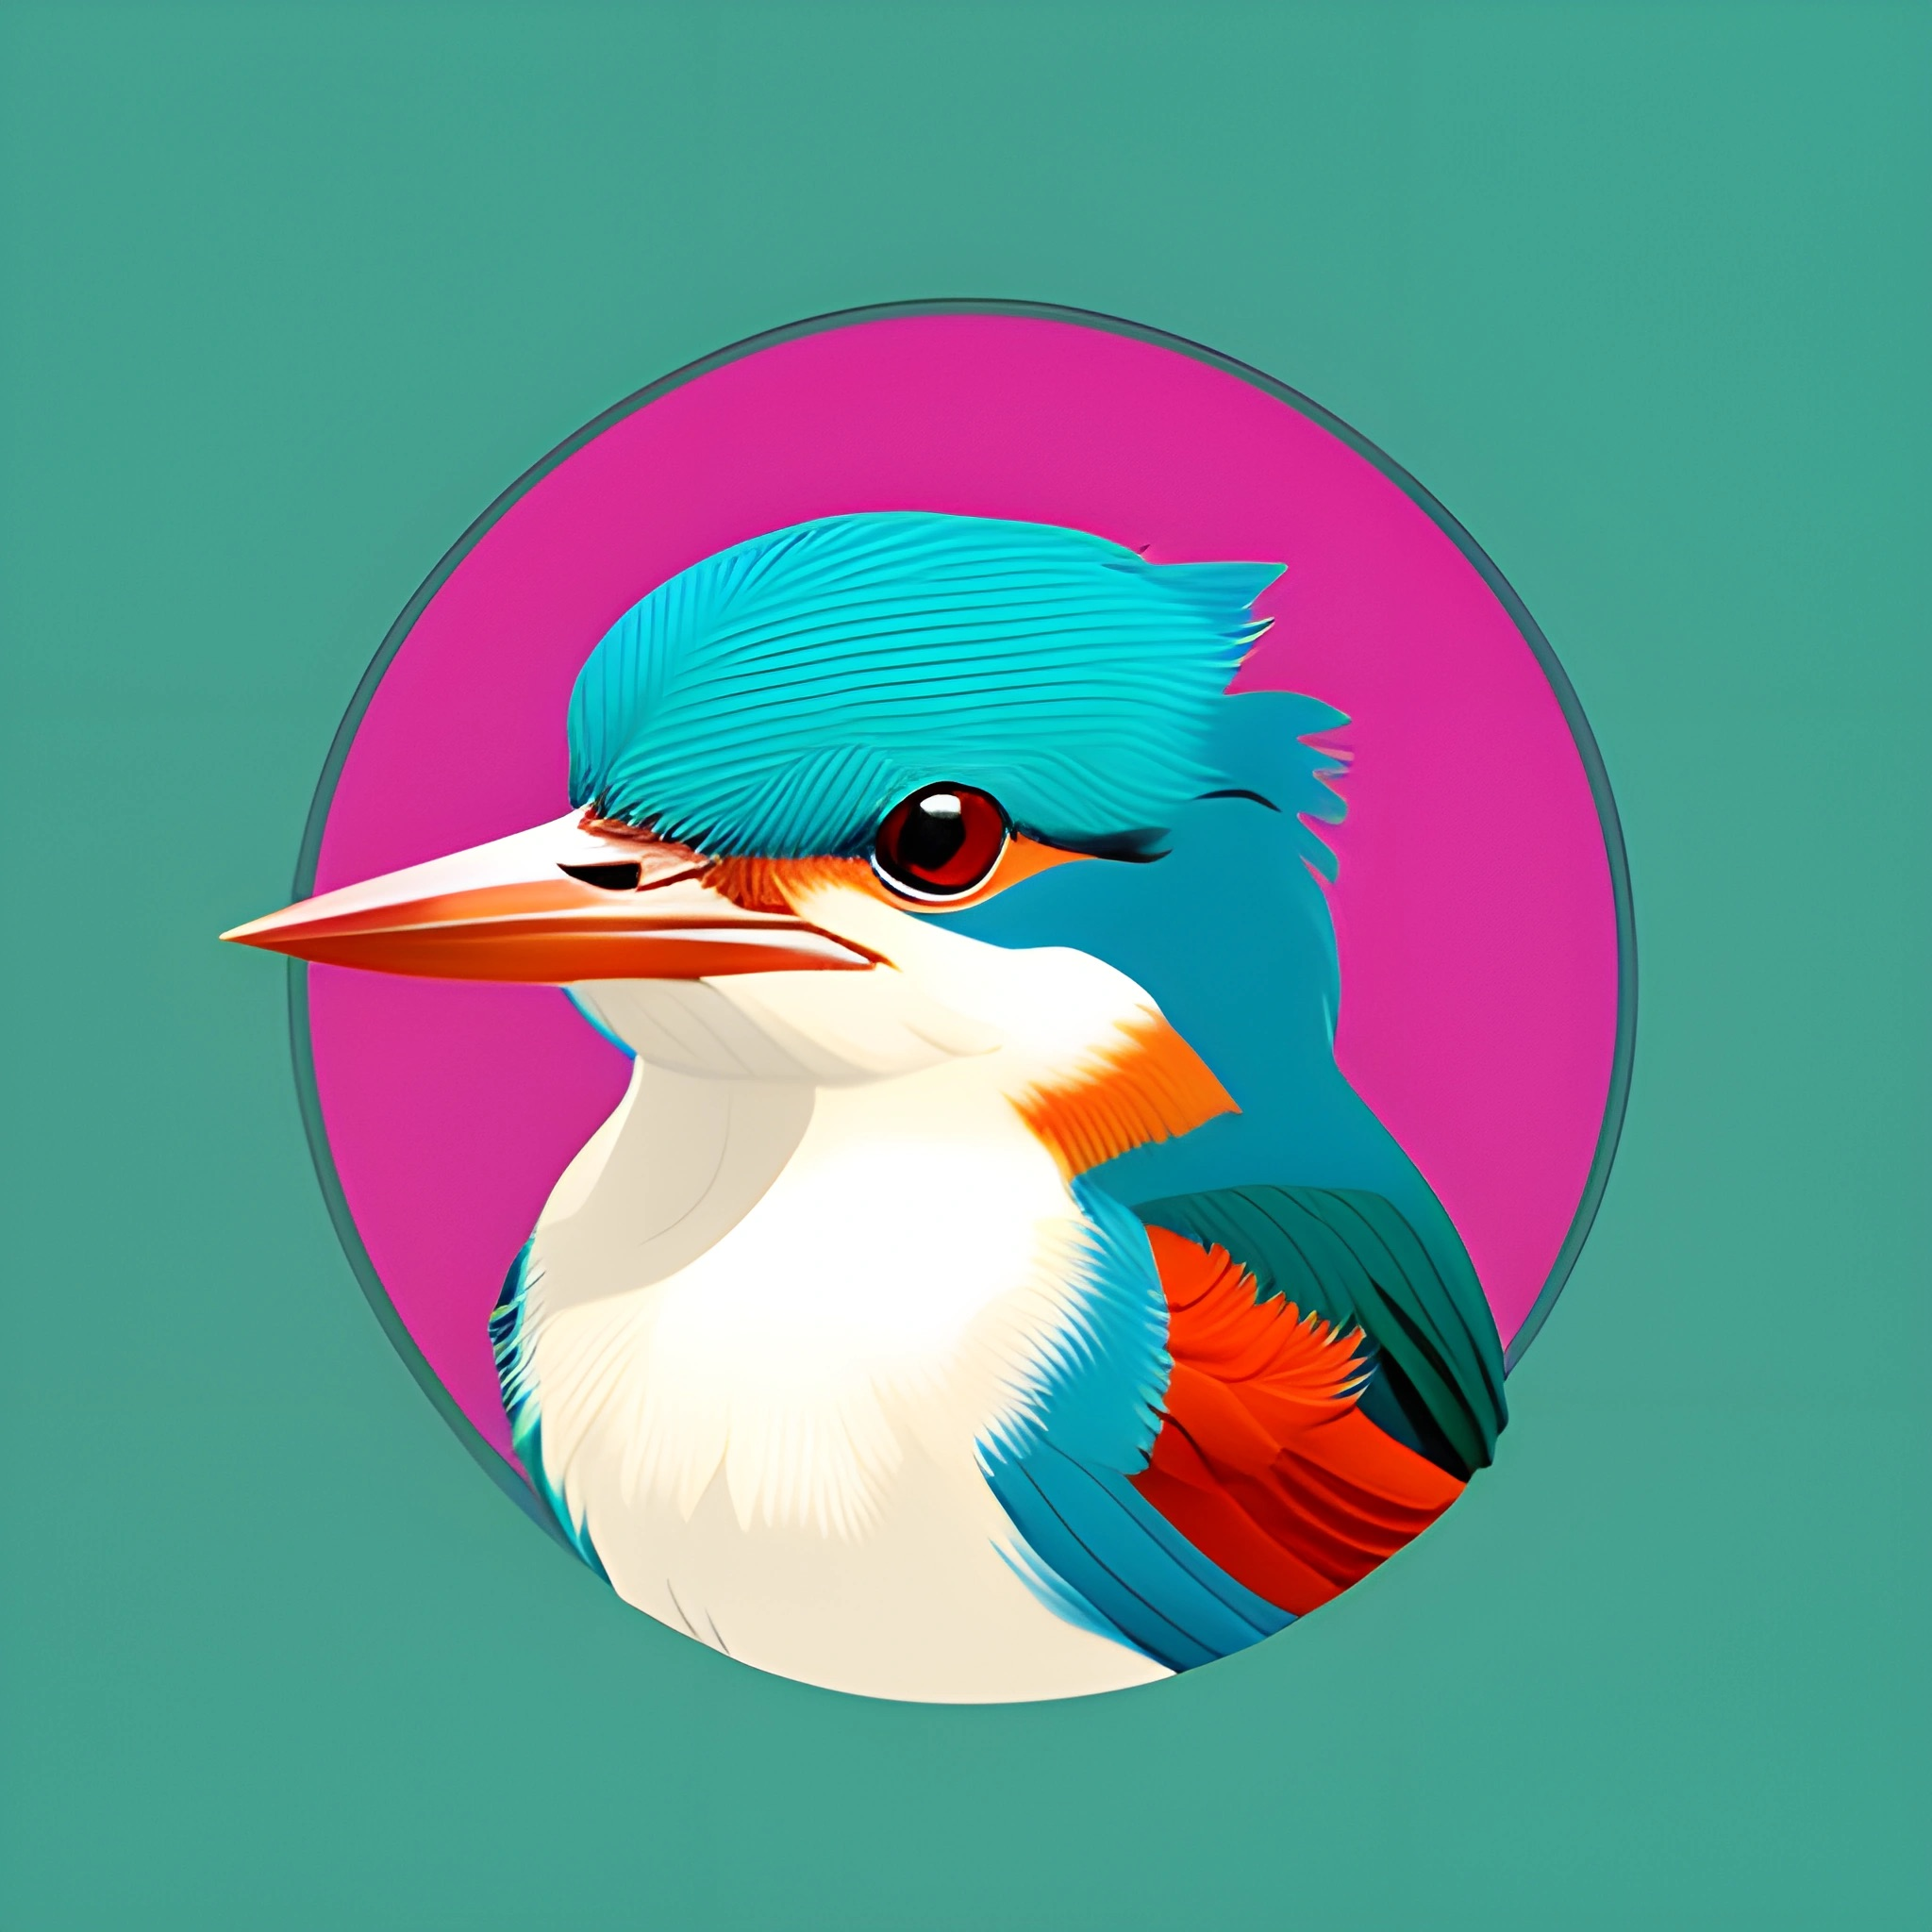 a bird with a blue head and orange beak